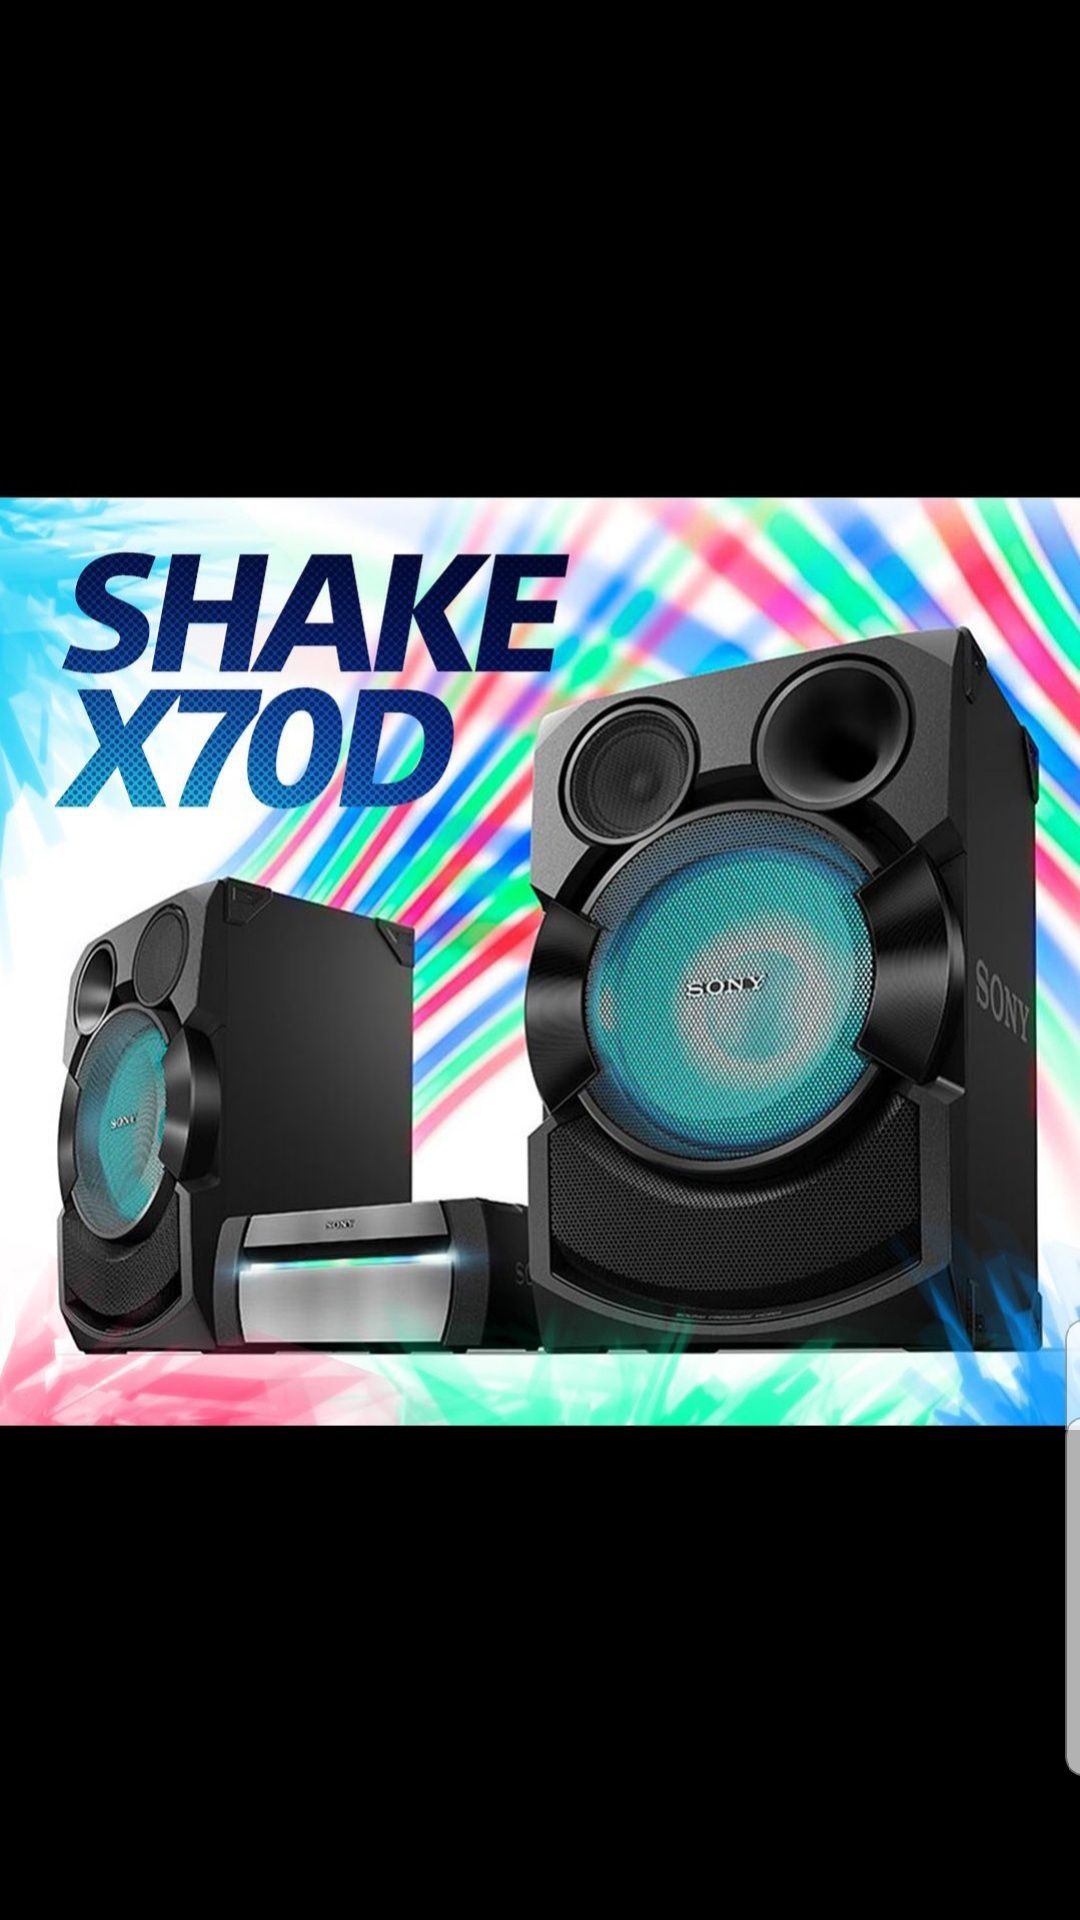 Sony shake x70d prodam